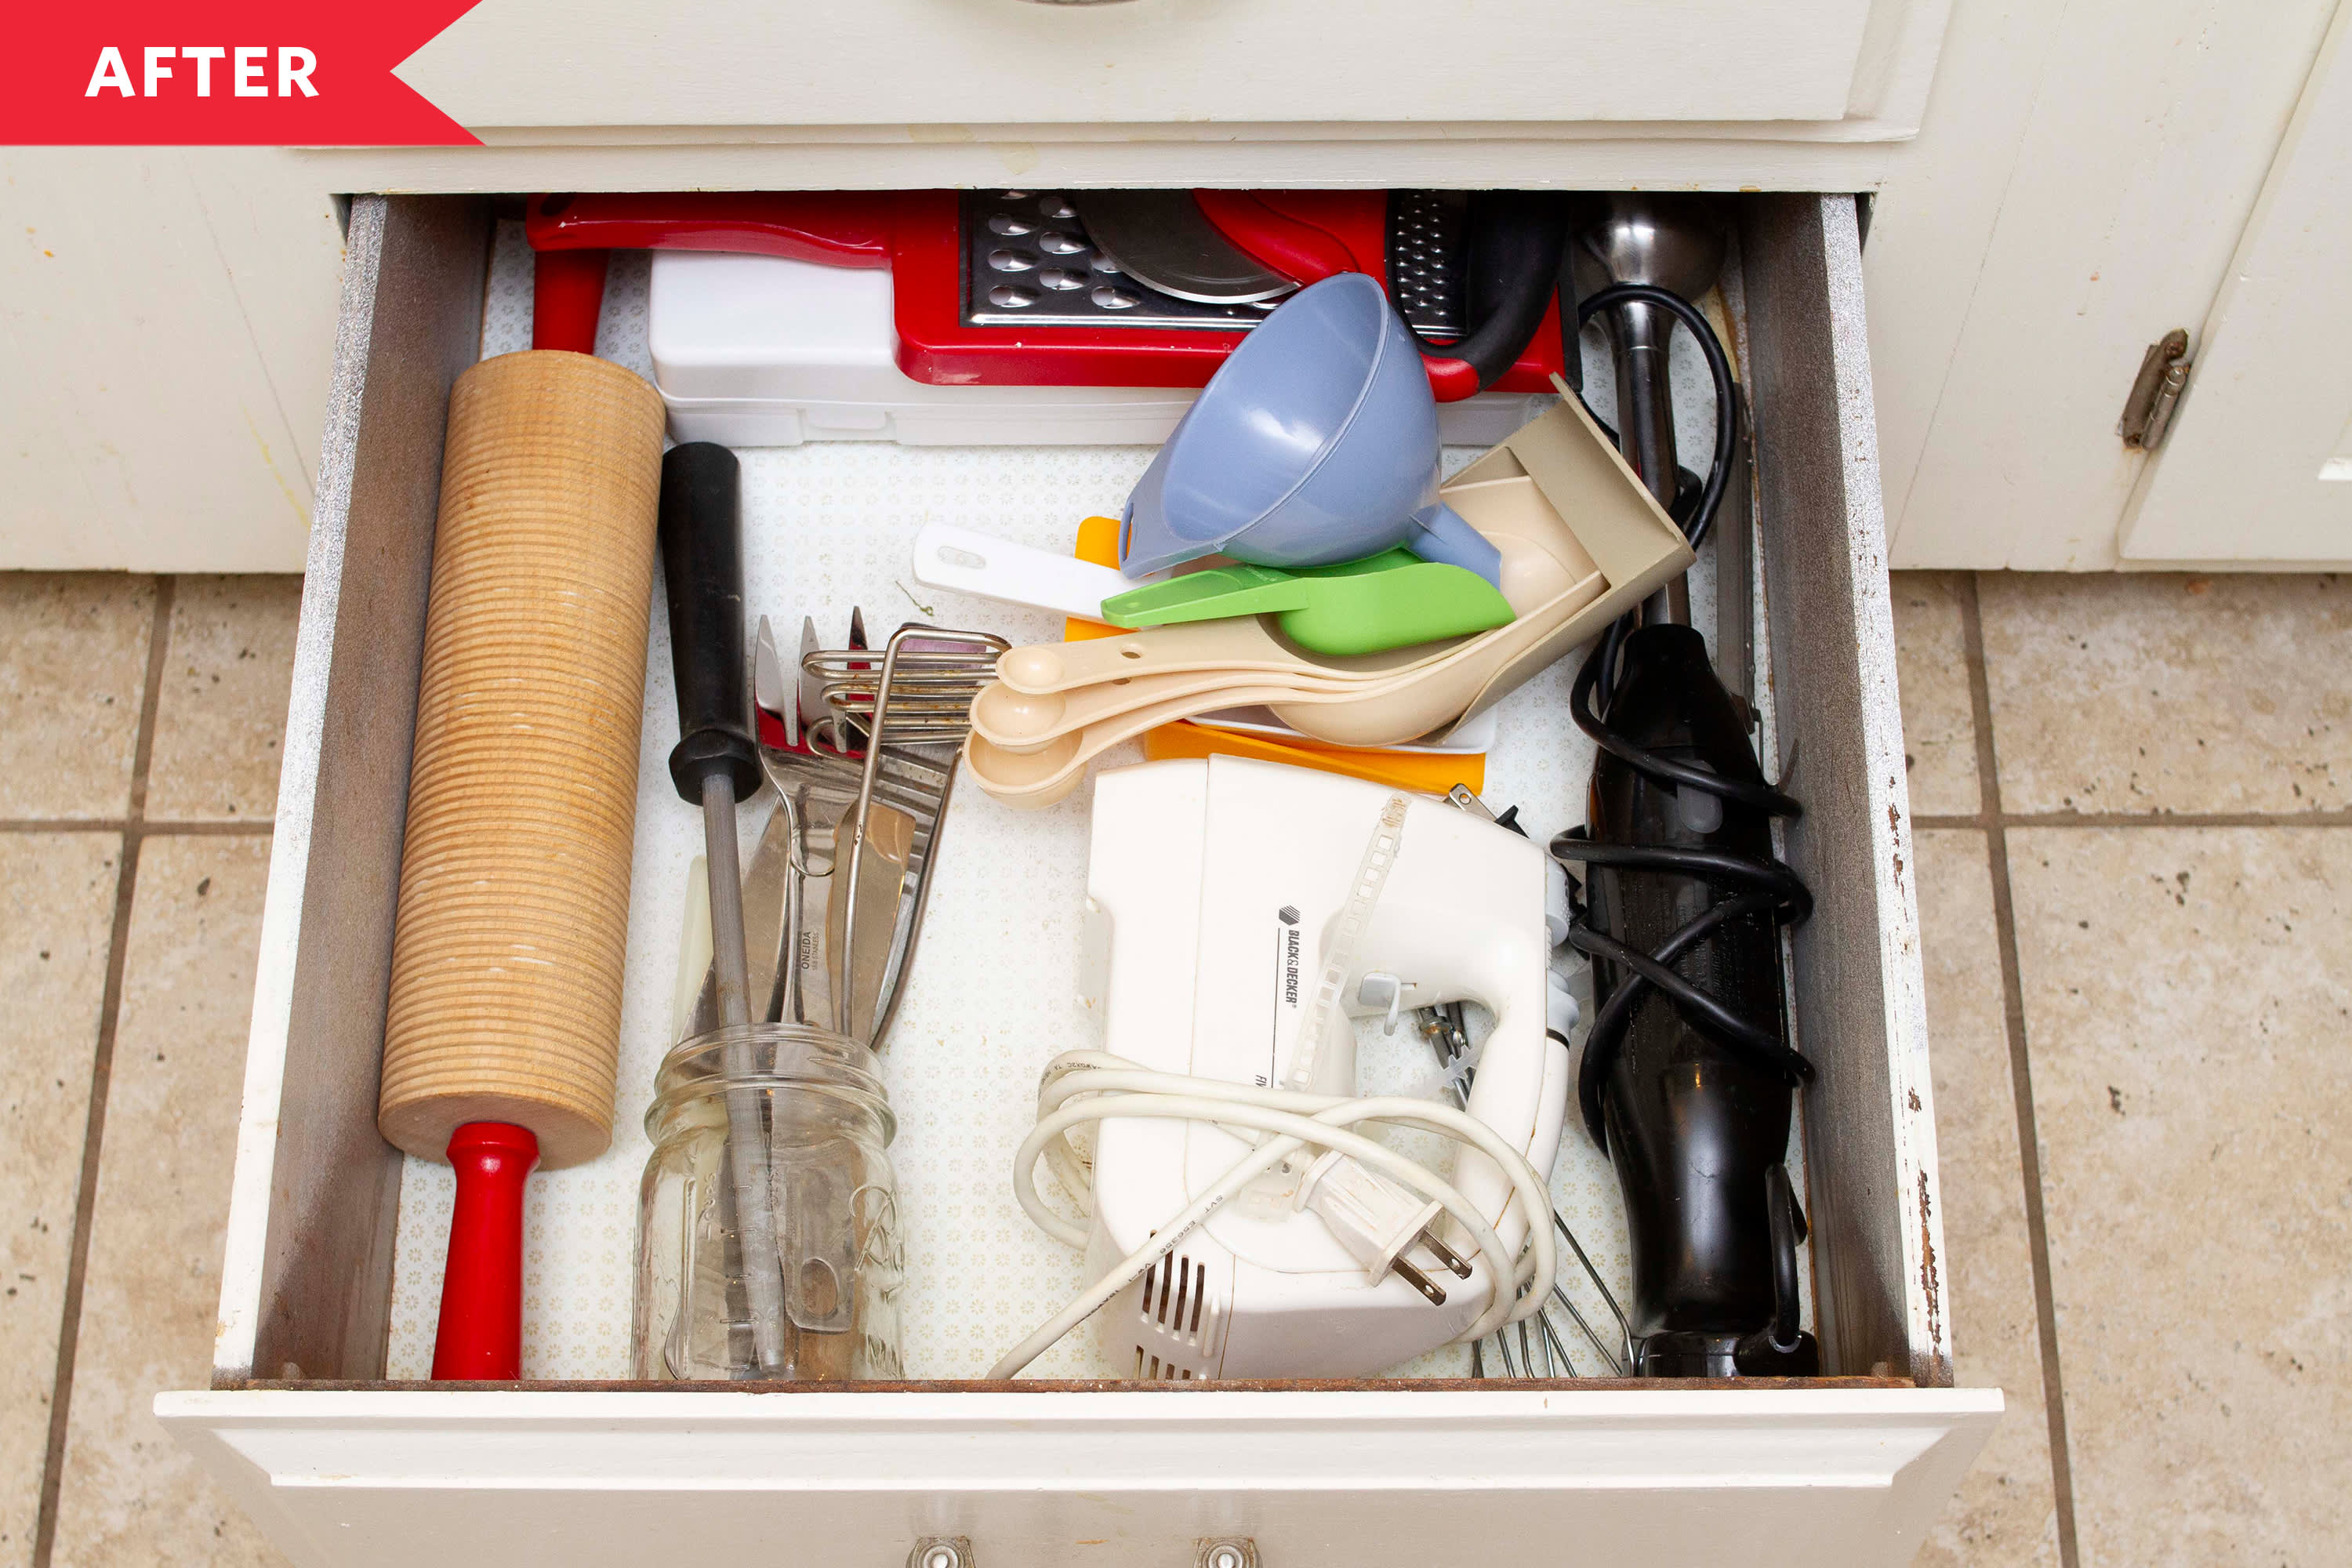 https://cdn.apartmenttherapy.info/image/upload/v1598466957/k/Edit/2020-08-Organizing-Parents-Kitchen/drawer-after-3.jpg